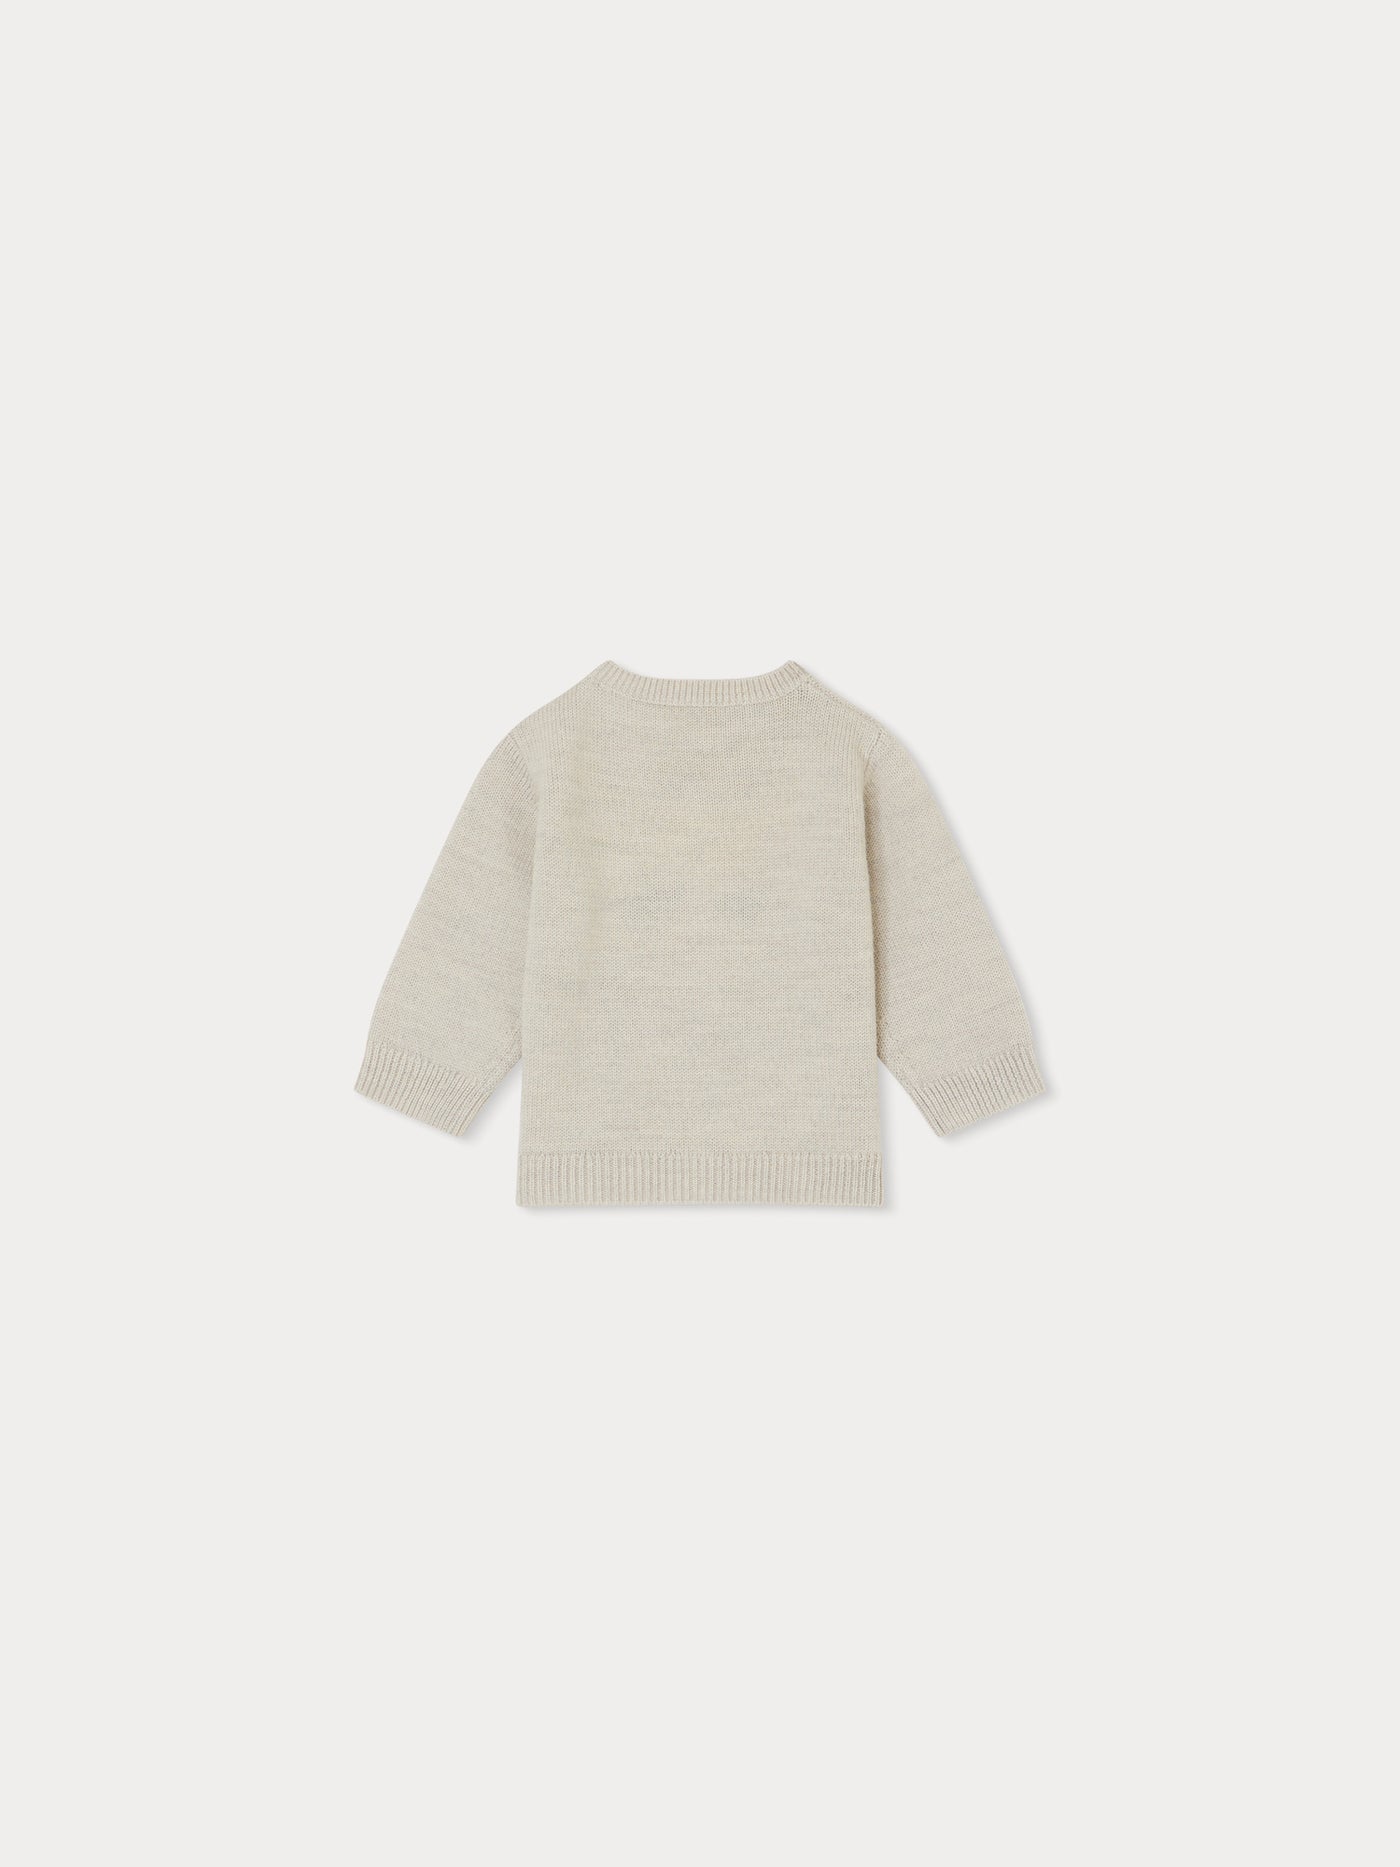 Almire Sweater heathered gray